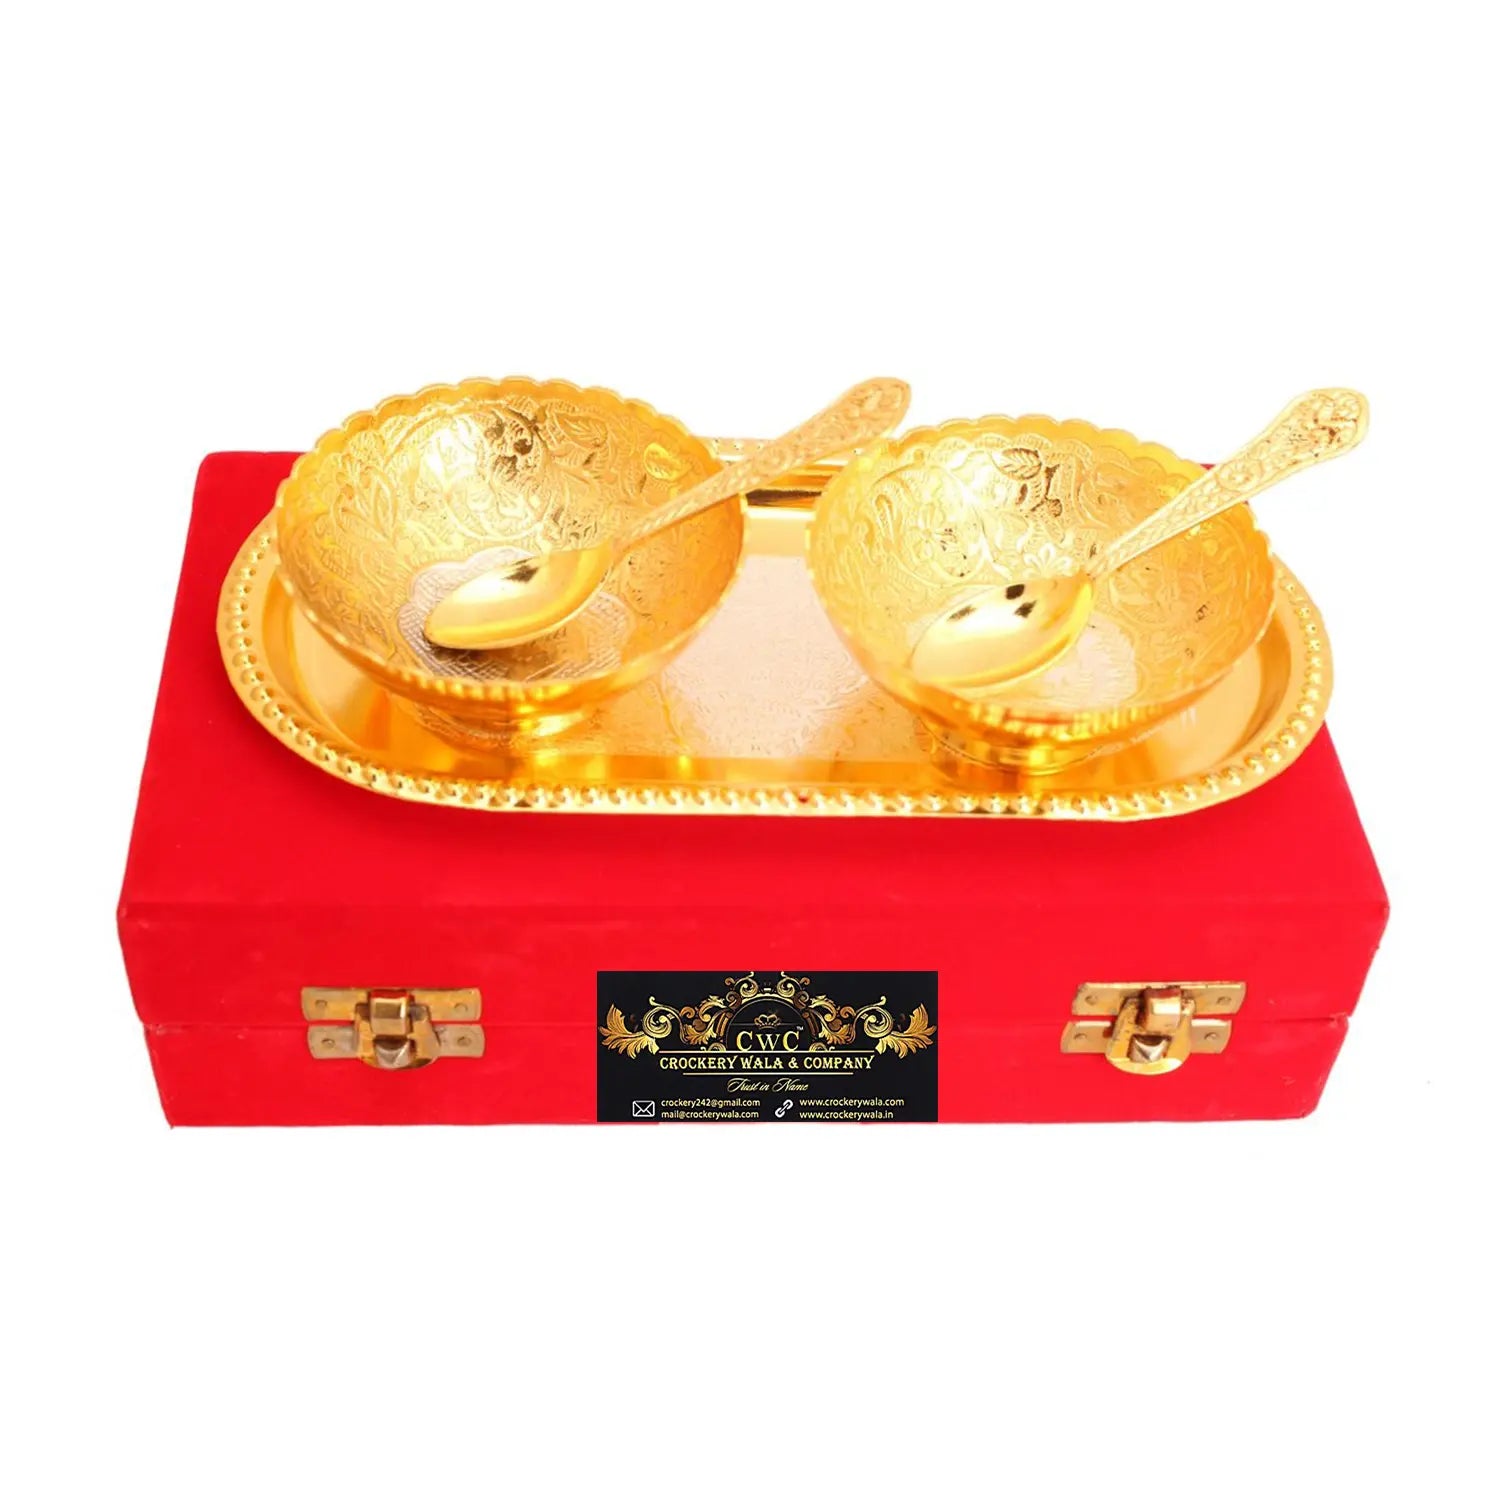 Crockery Wala & Company Silver Plated Gold Polished Bowl Set with 8 Spoons & 4 Tray, Set of 4, Diwali Gift Item - CROCKERY WALA AND COMPANY 